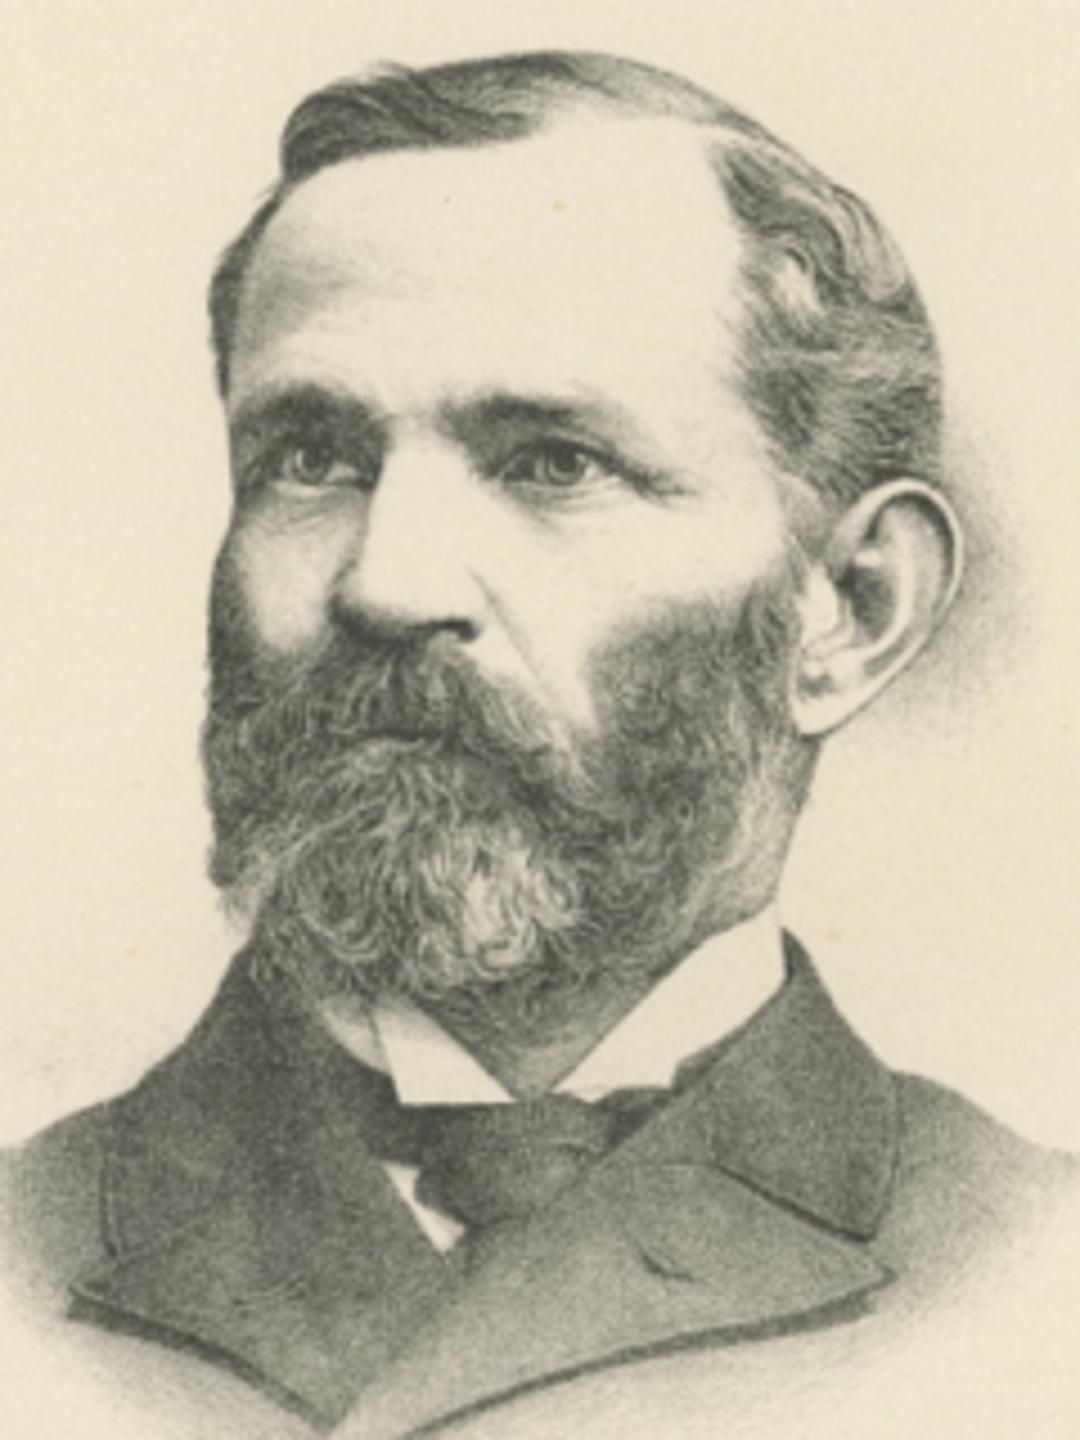 Isaac Kite Wright (1849 - 1908)